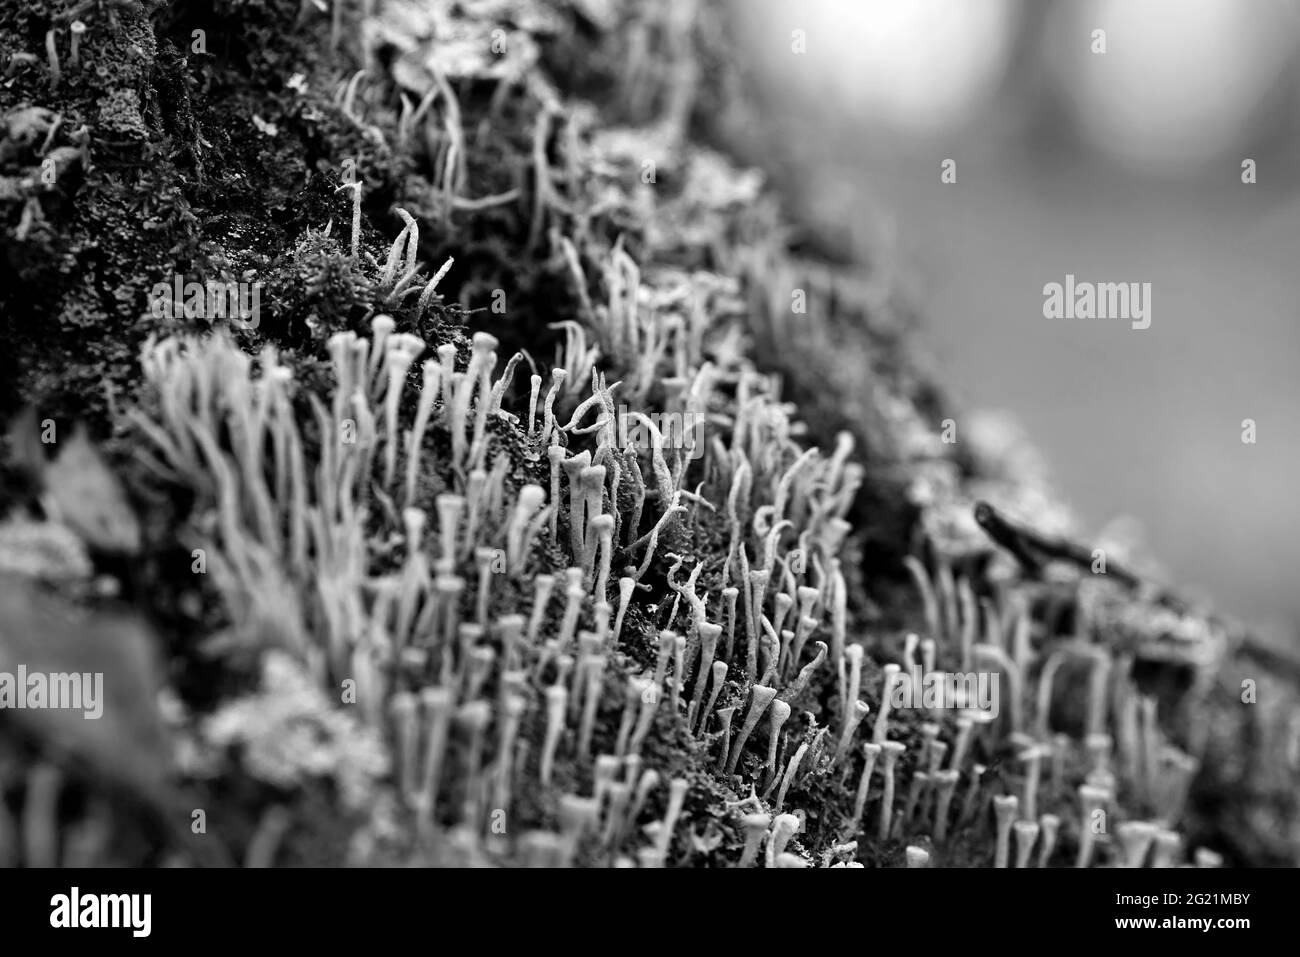 Lichen cladonia coniocraea and moss on tree bark in autumn forest. Black and white photo. Stock Photo